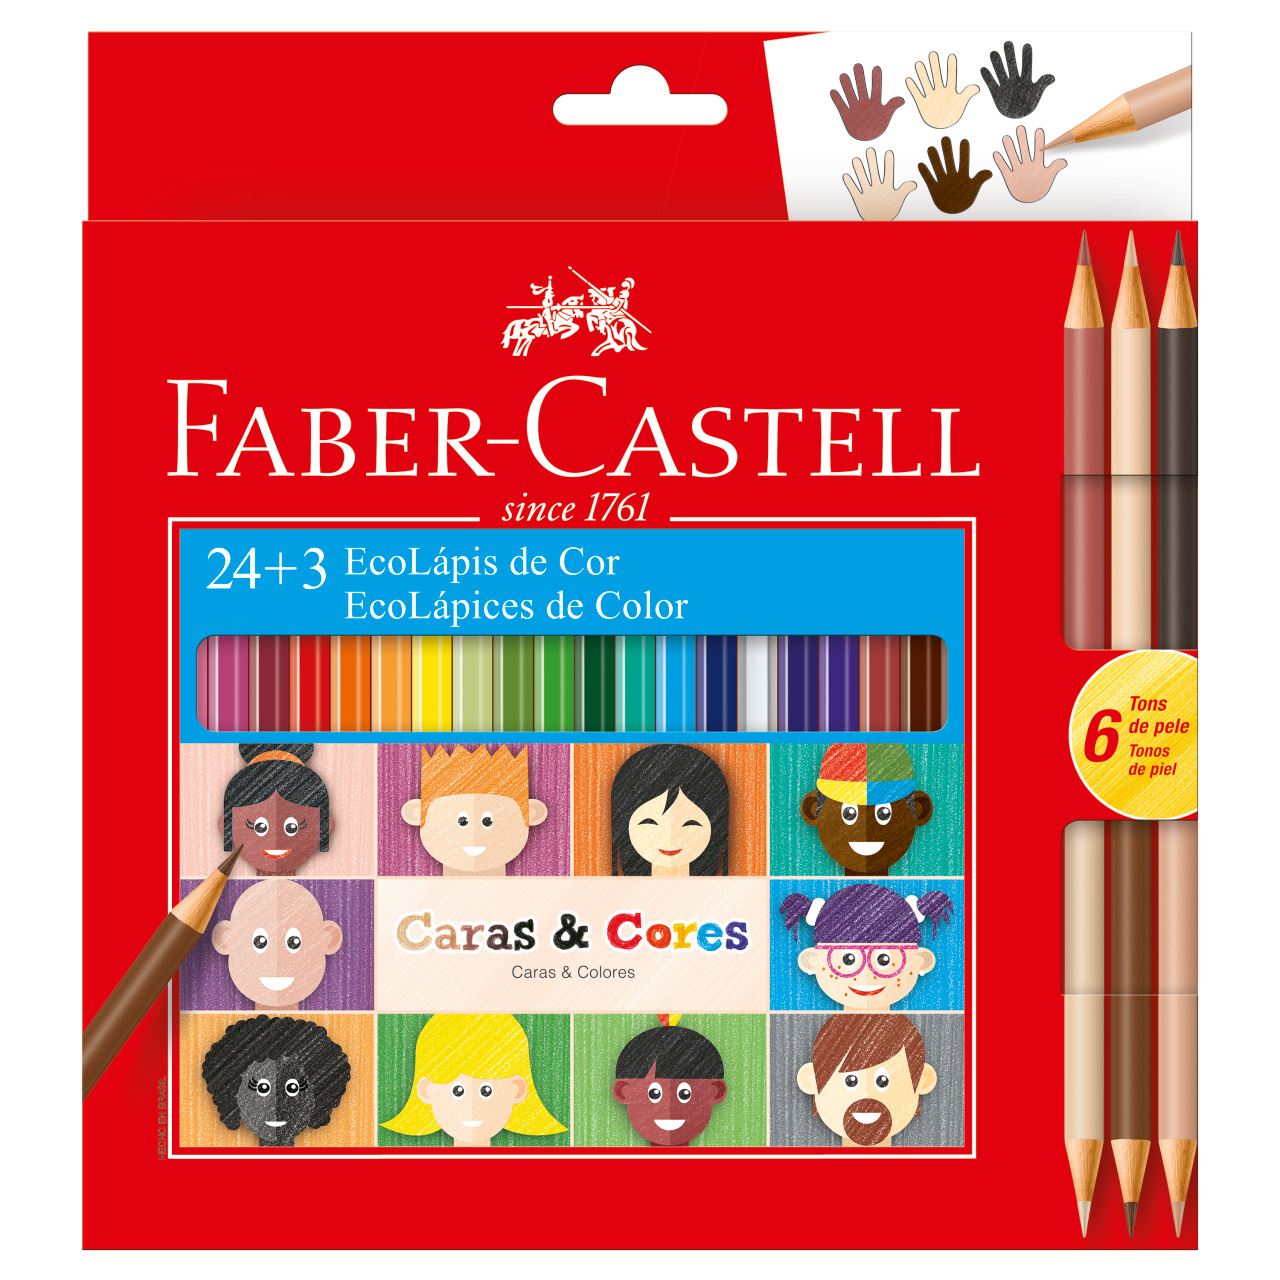 Faber-Castell - Ecolapis de Cor Caras & Cores 24 + 3